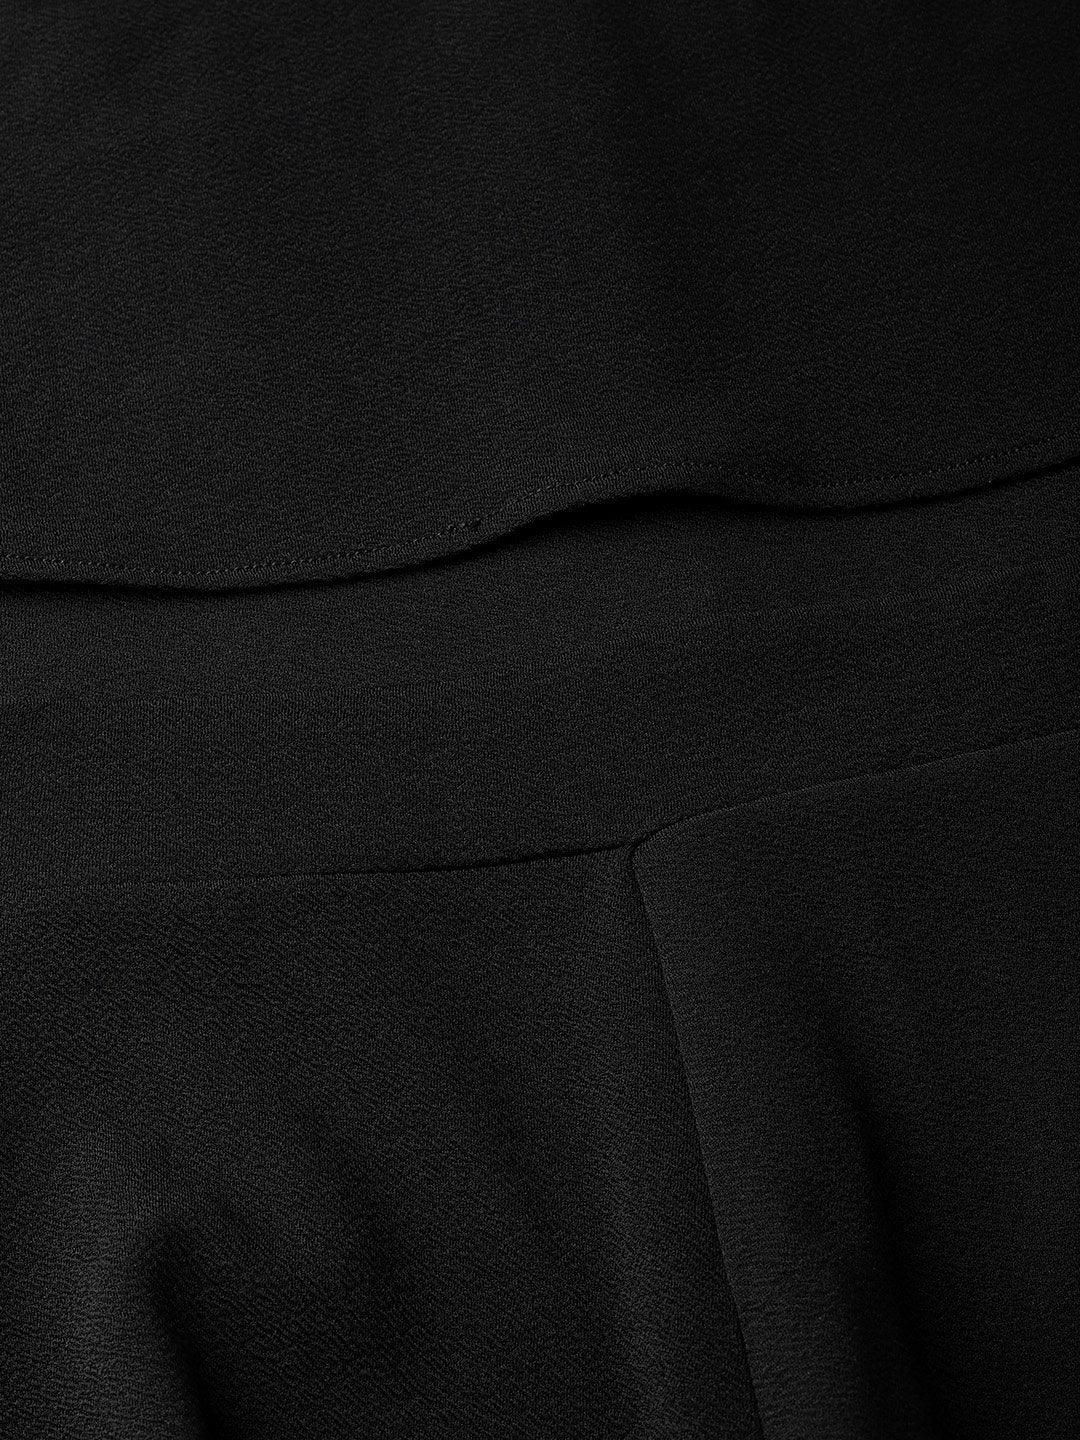 Women's Black Layered Jumpsuit - SASSAFRAS